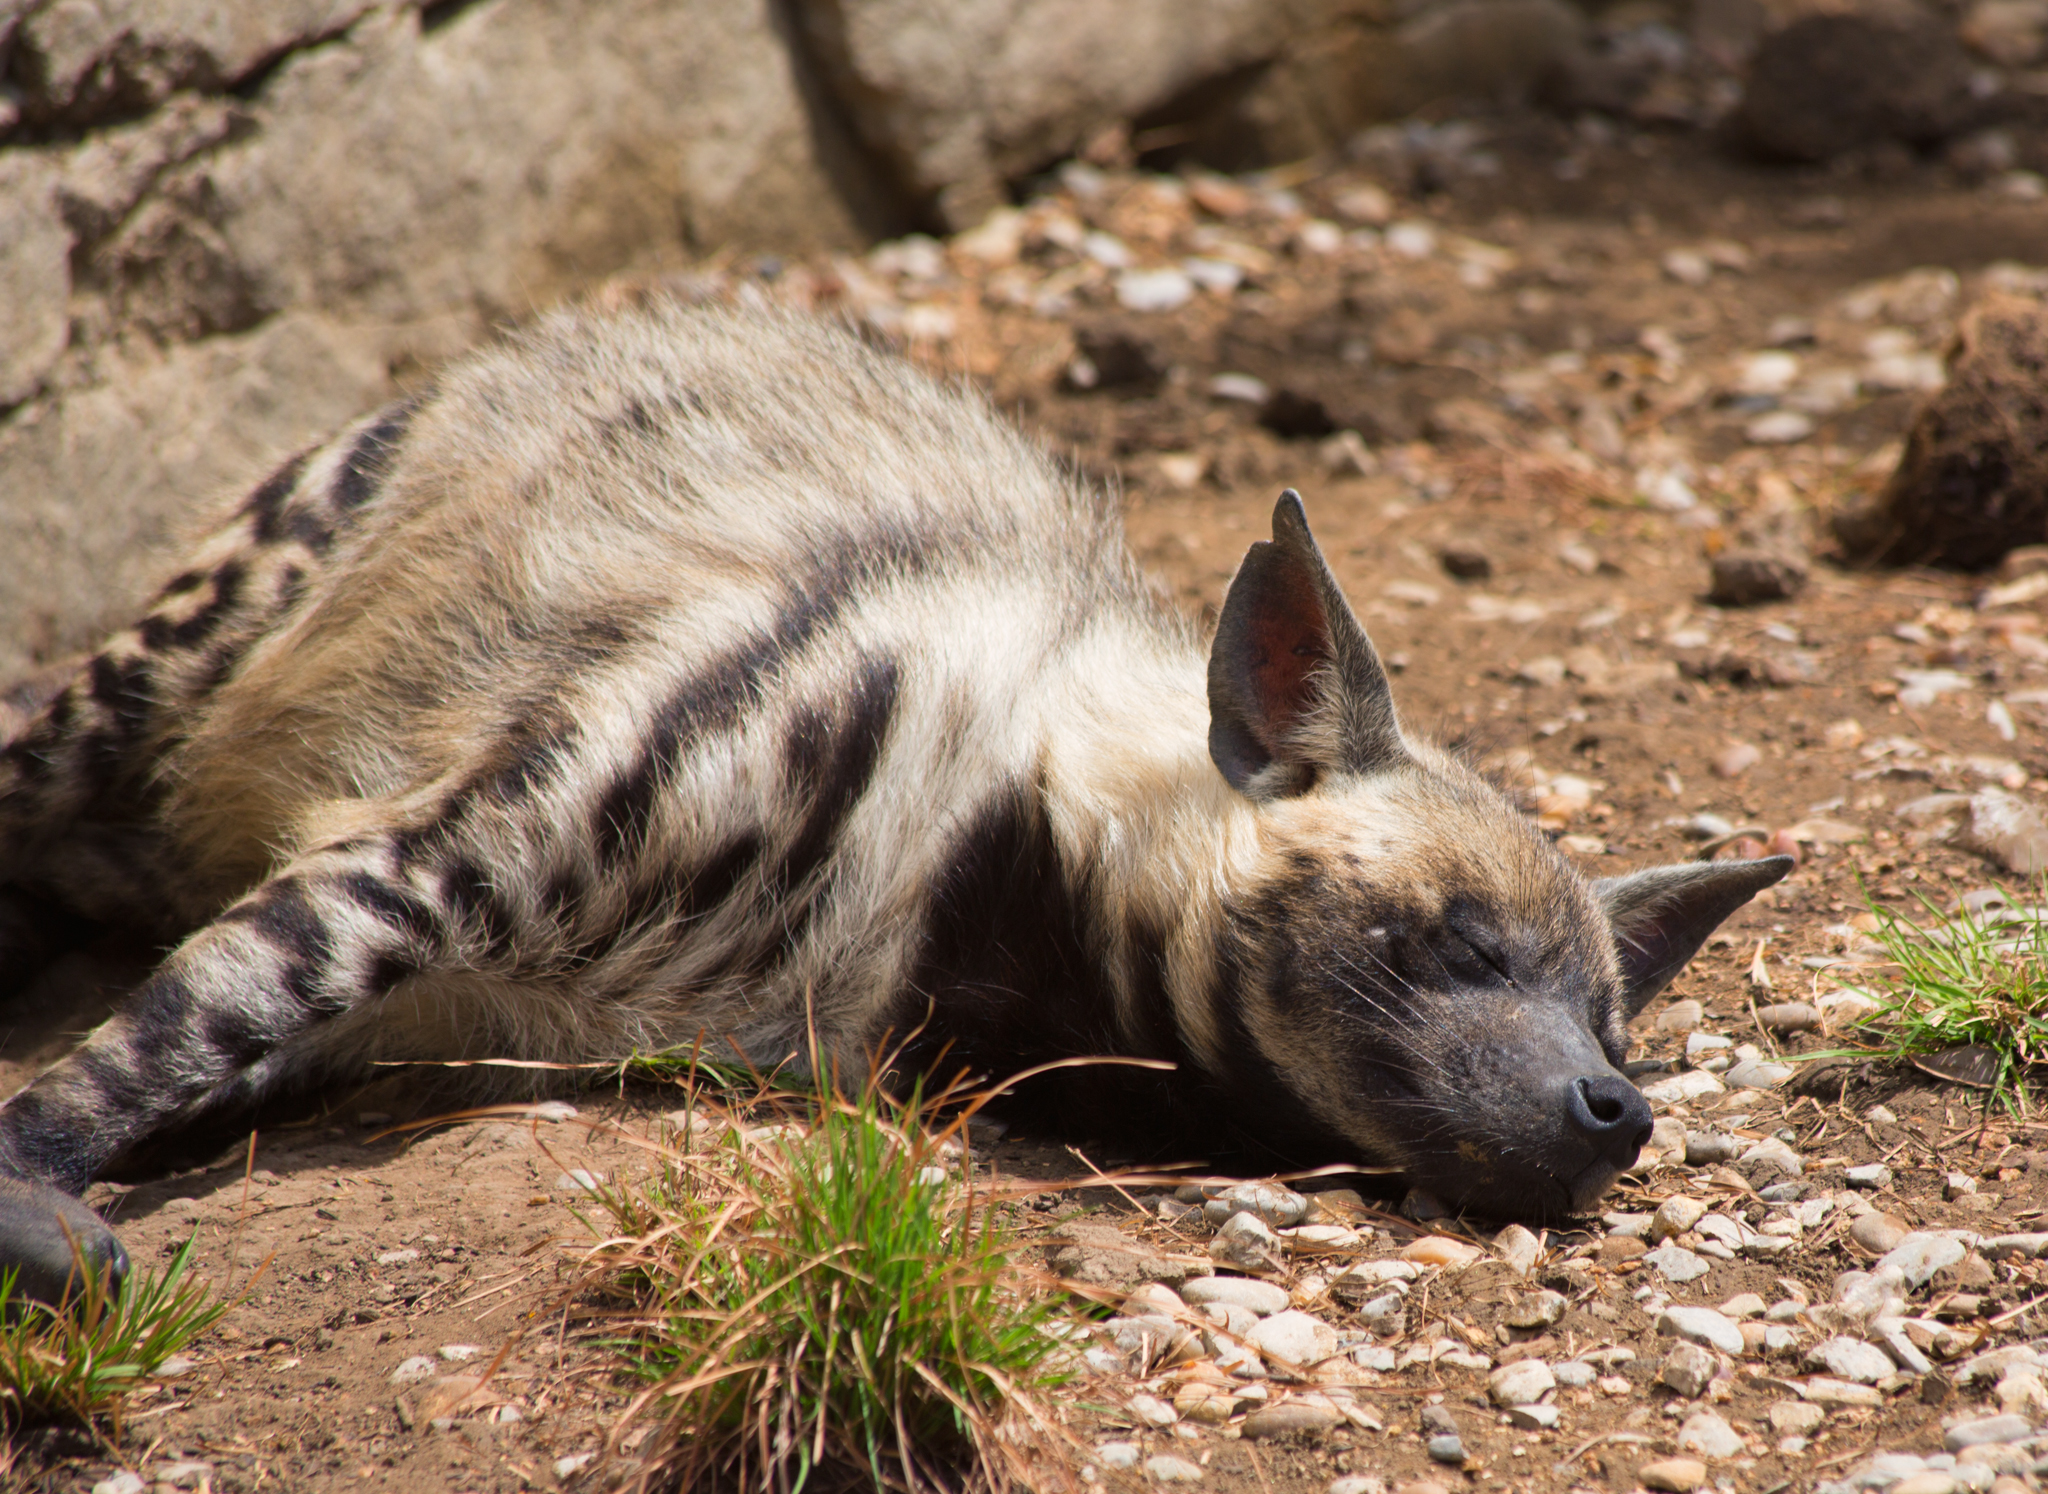 Tired Hyena, Fort Worth Zoo